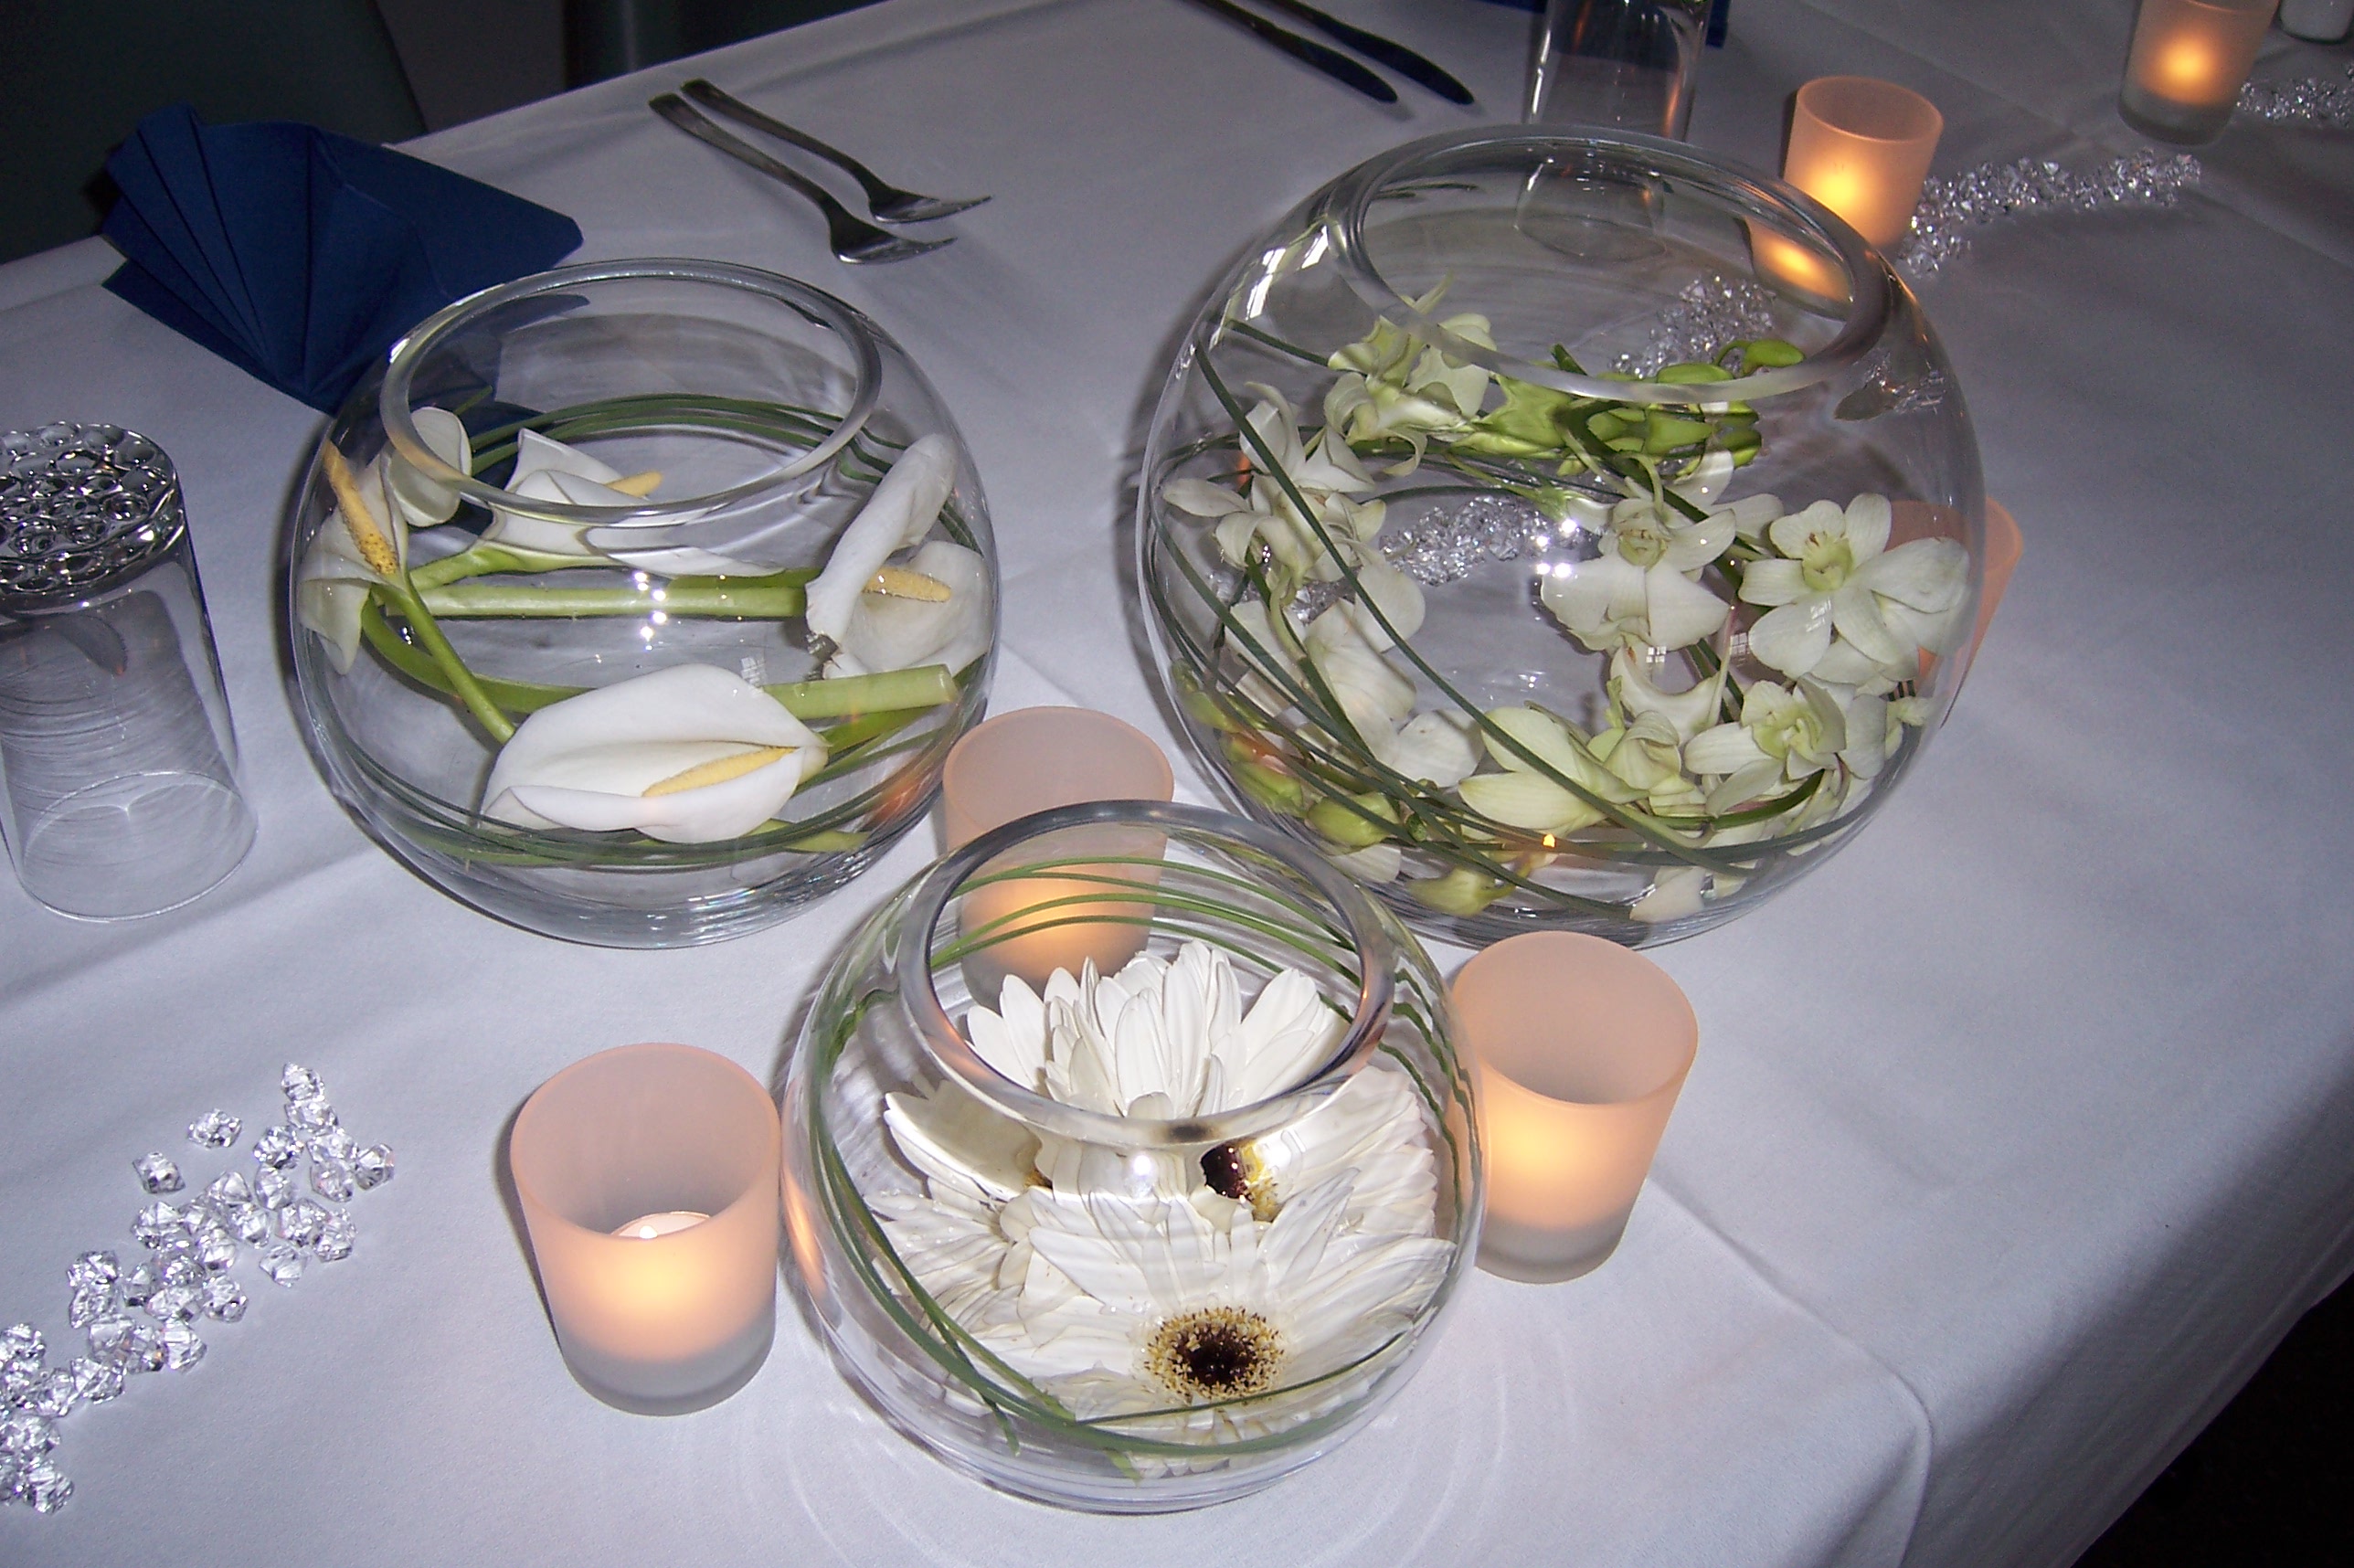 3. Wedding Table Decorations